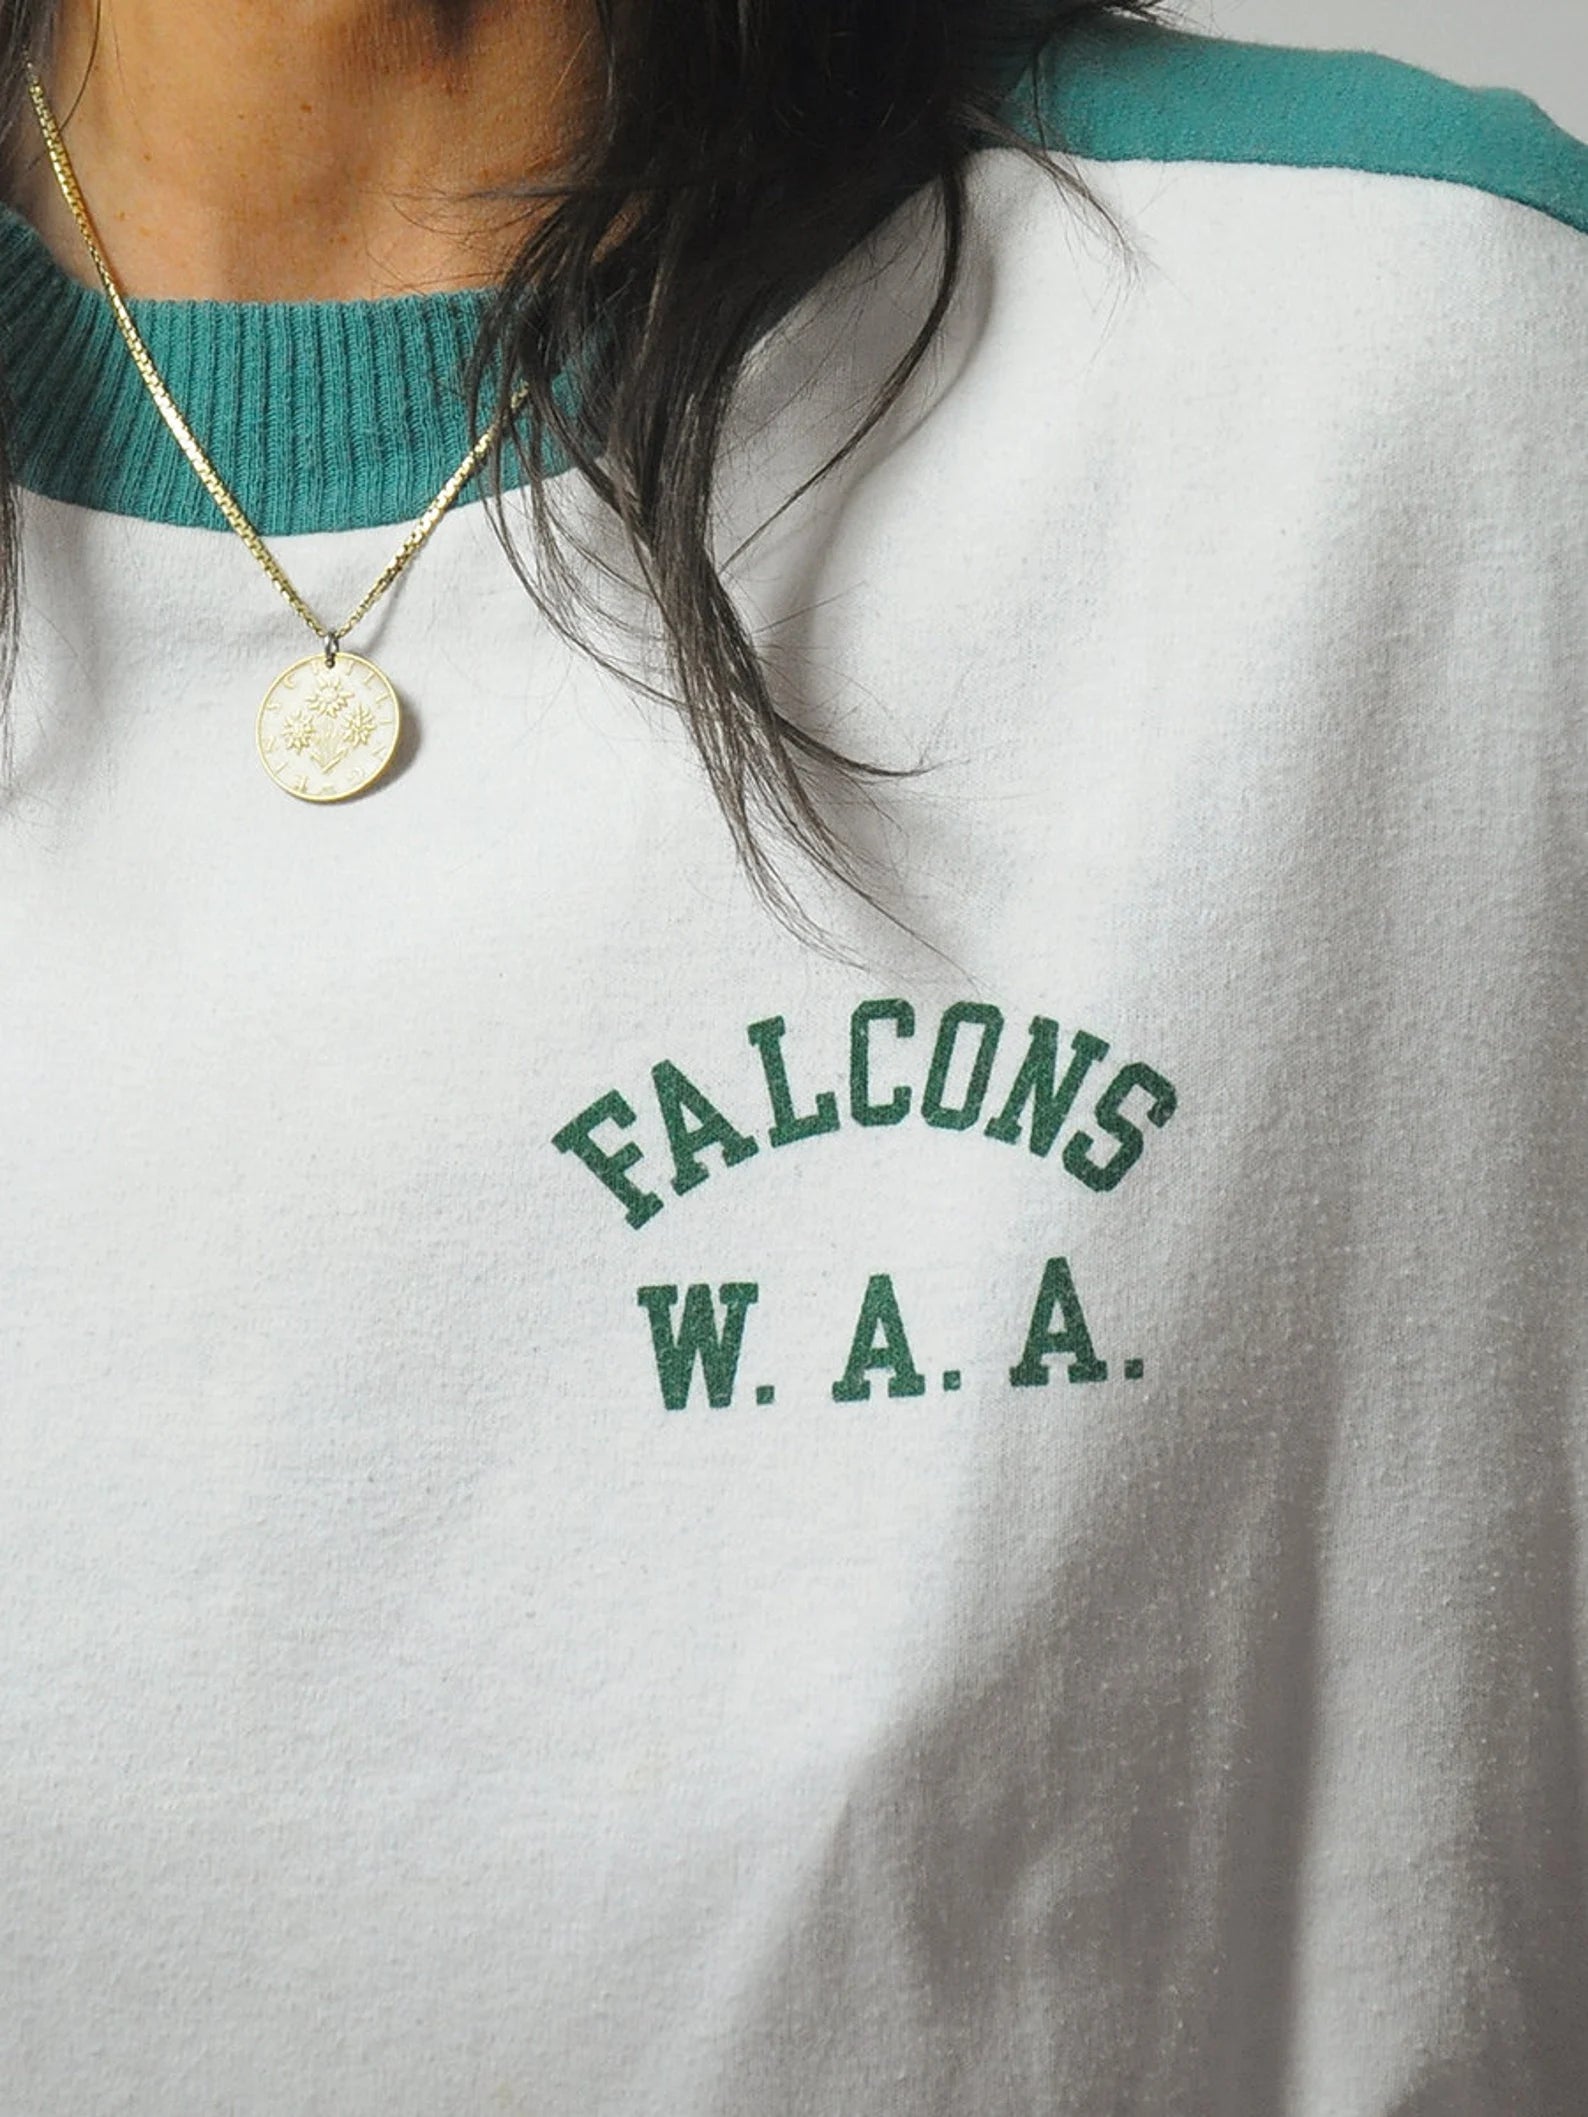 1970's Champion Falcons W.A.A. Tee